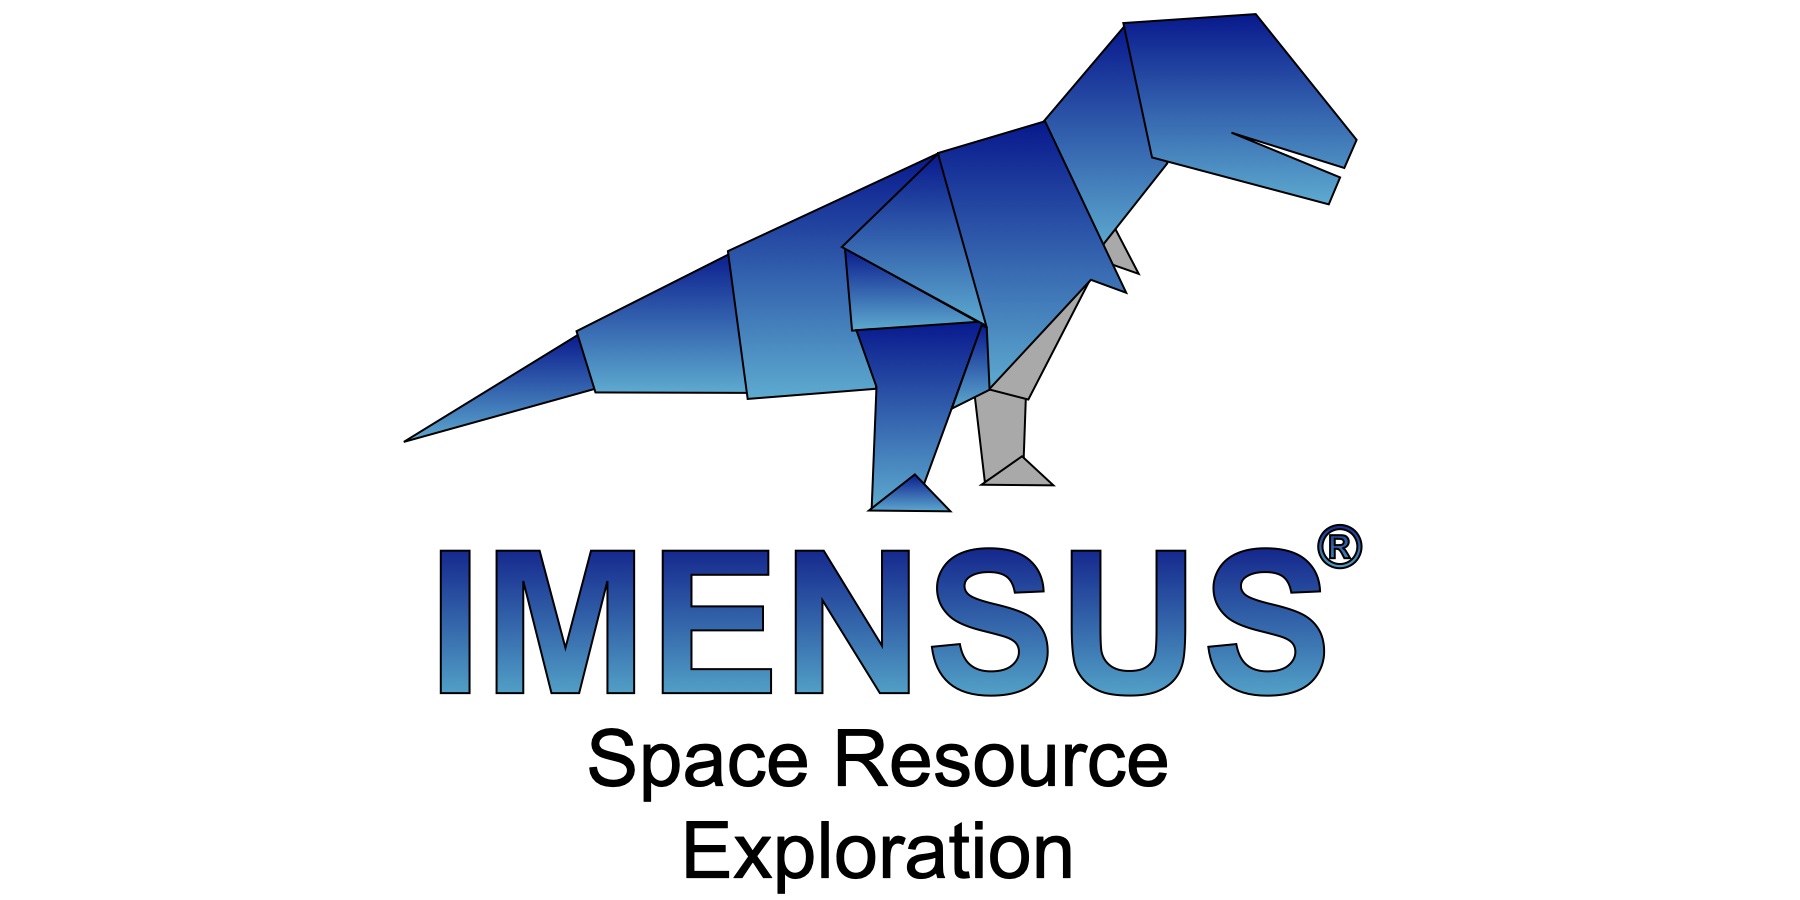 IMENSUS Space Resource Exploration